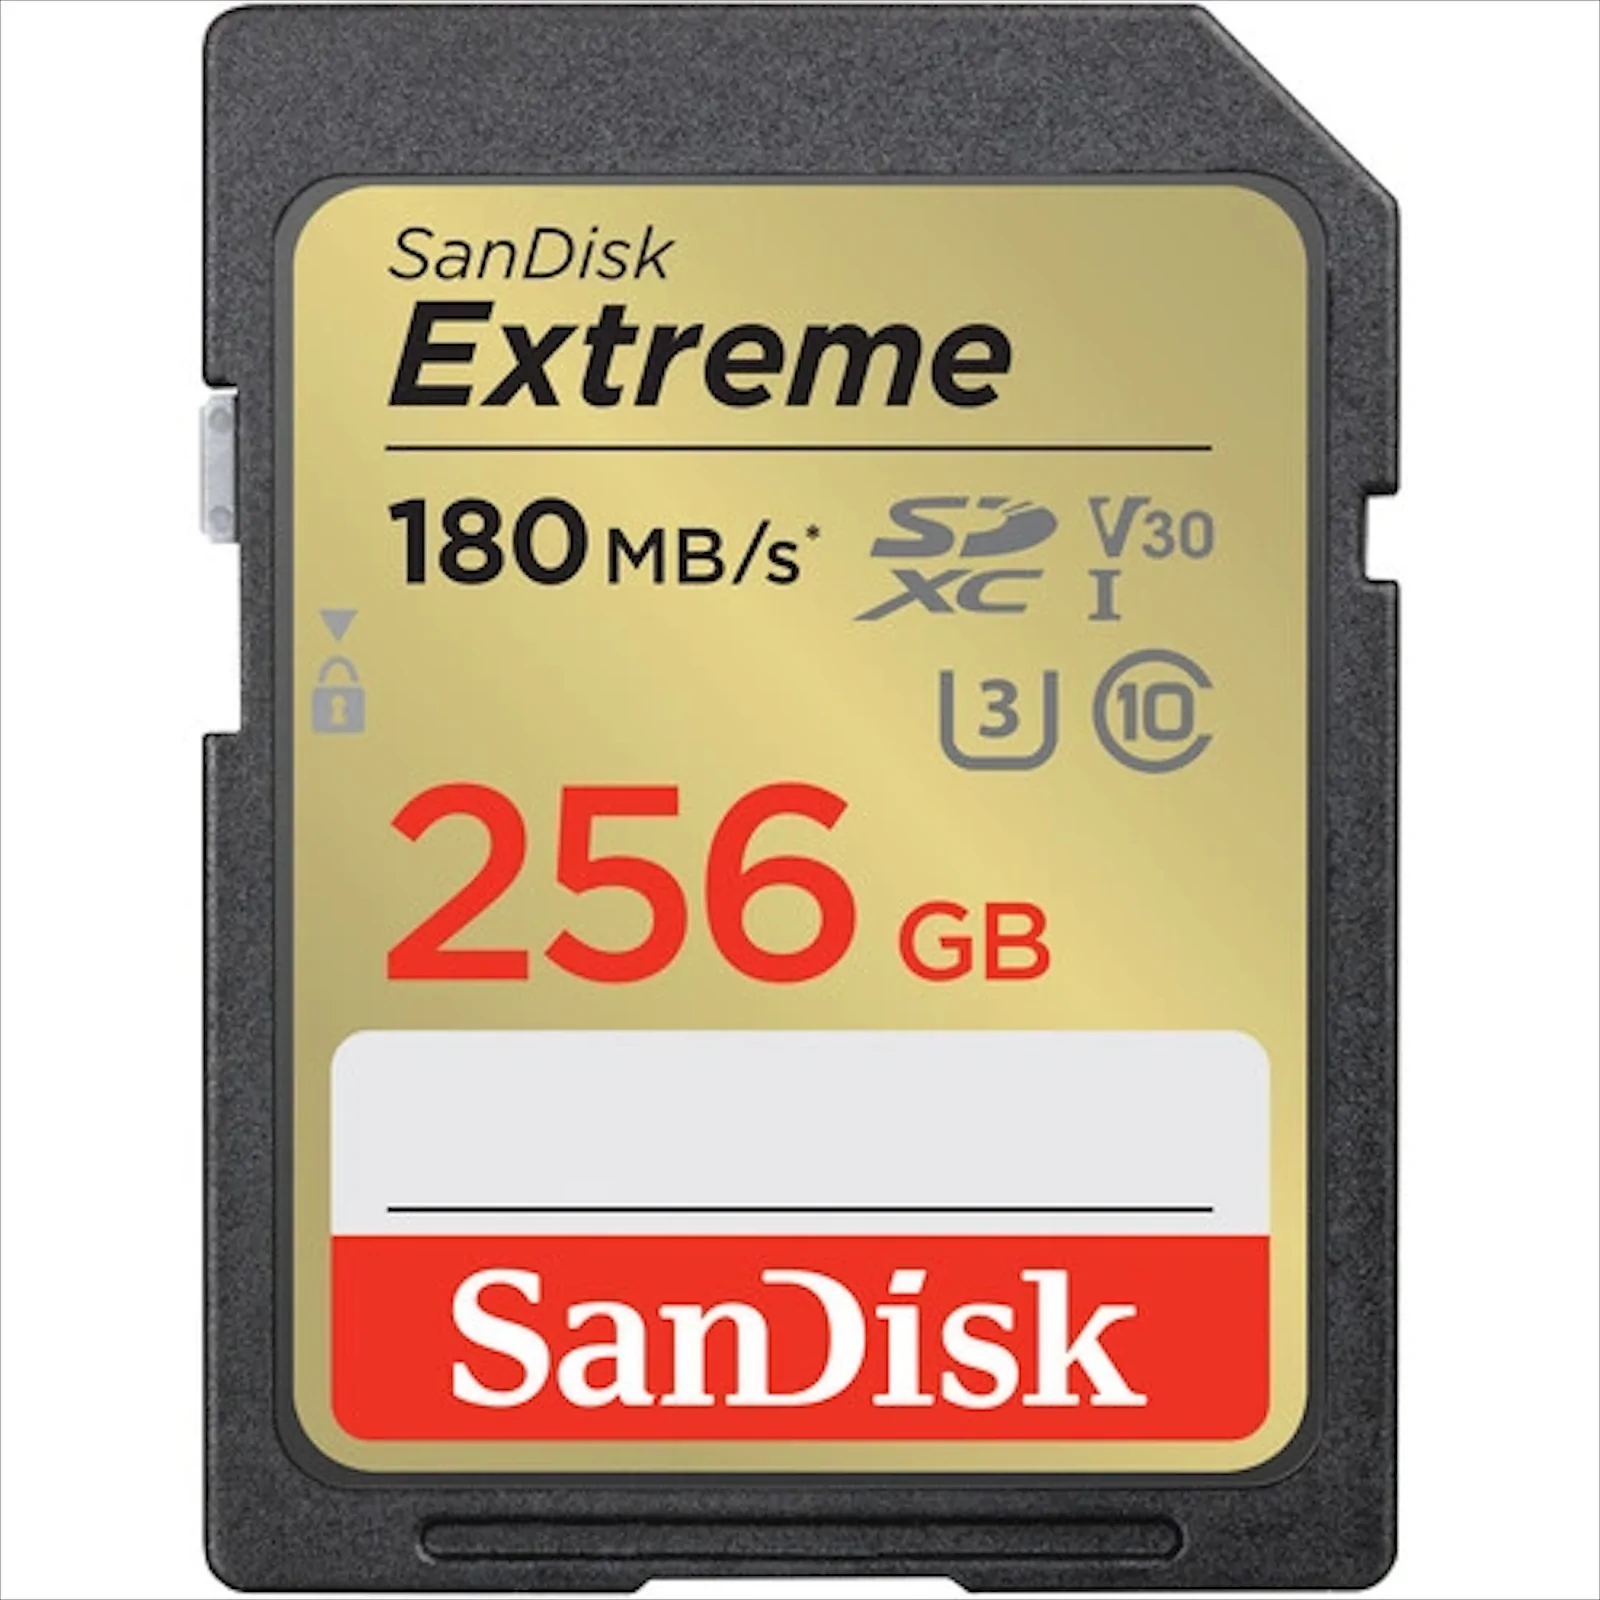 SanDisk 256GB Extreme UHS-I SDXC Memory Card Sandisk Flash Memory Cards